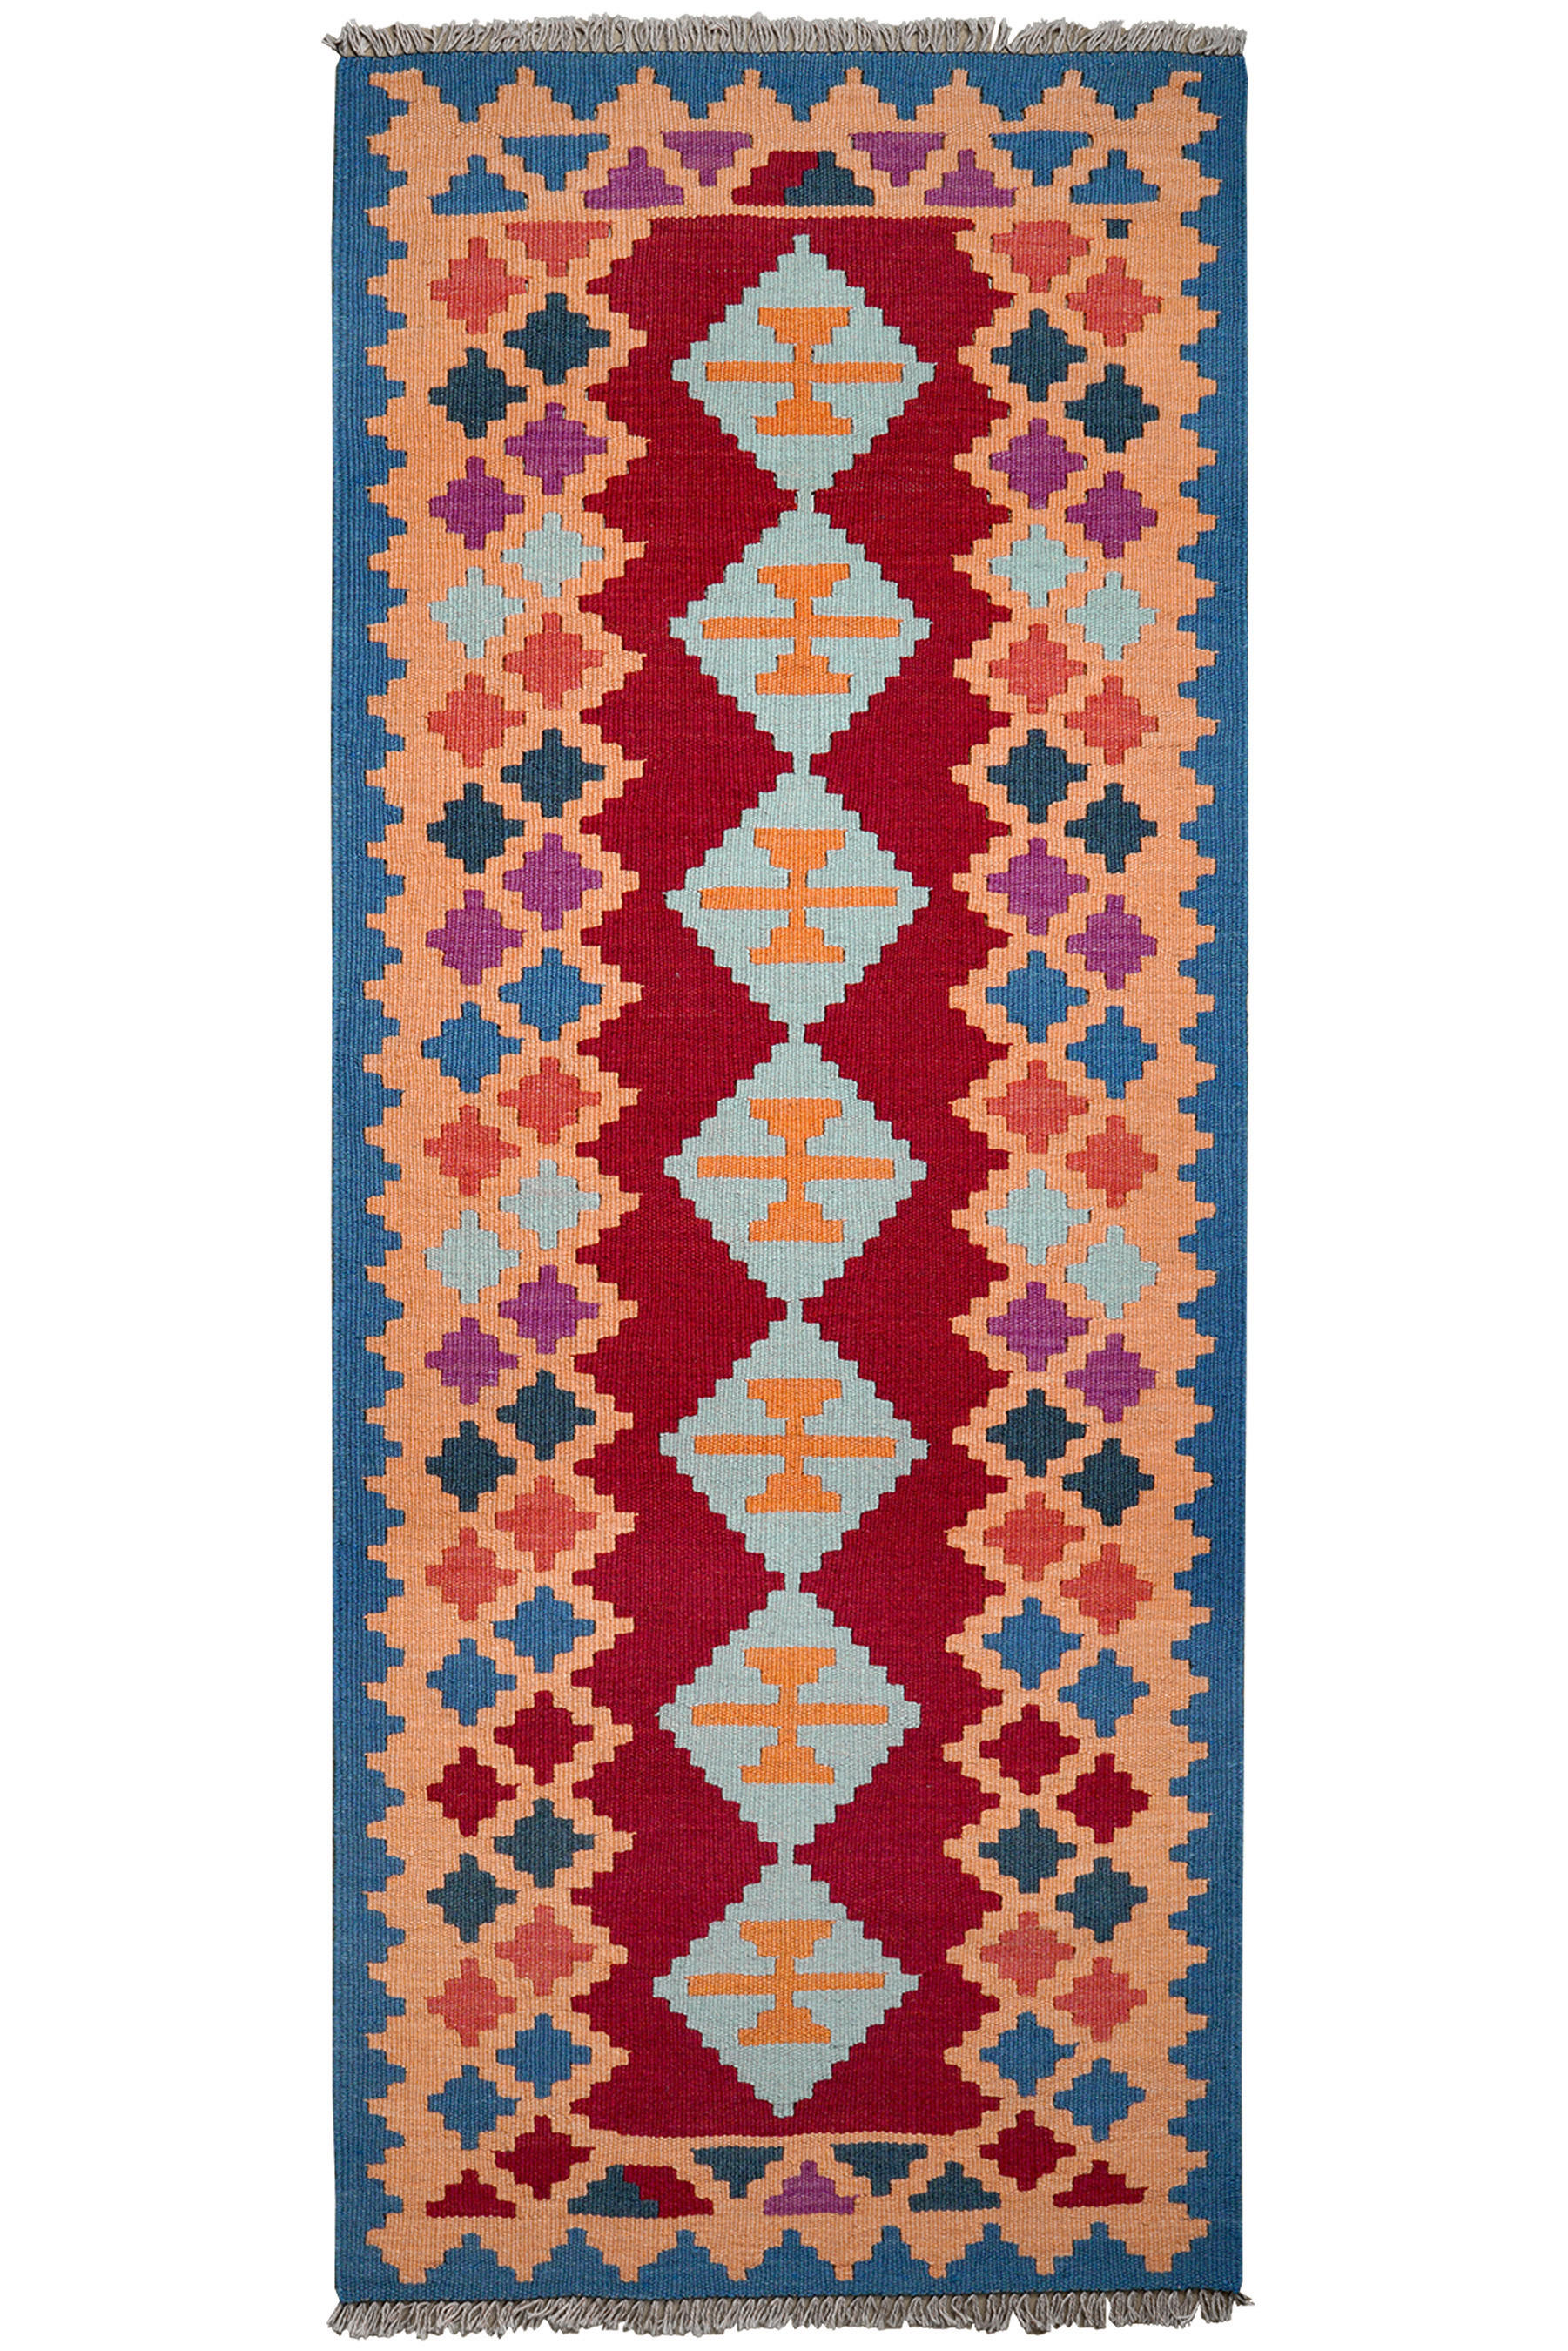 PersaTepp Teppich Kelim Gashgai multicolor B/L: ca. 80x200 cm Kelim Gashgai - multicolor (80,00/200,00cm) - PersaTepp